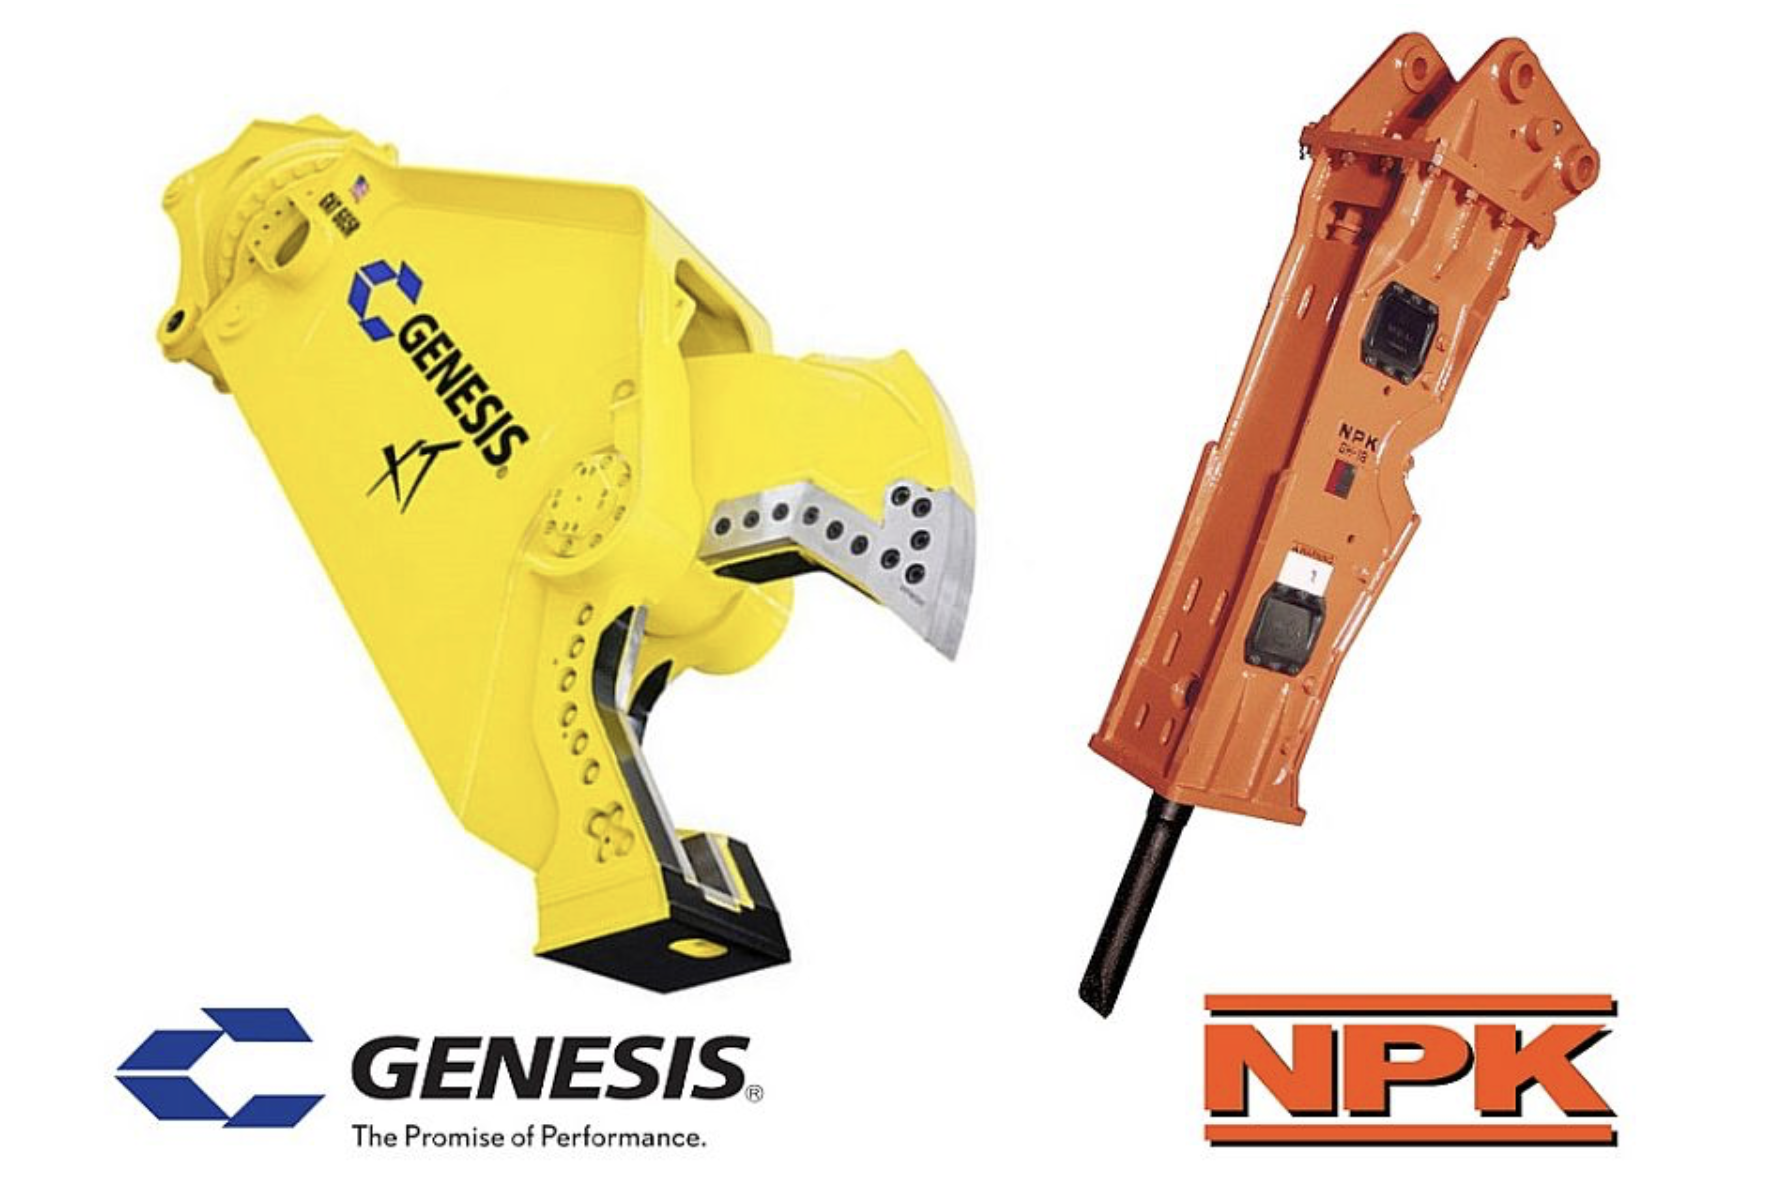 genesis and npk tools